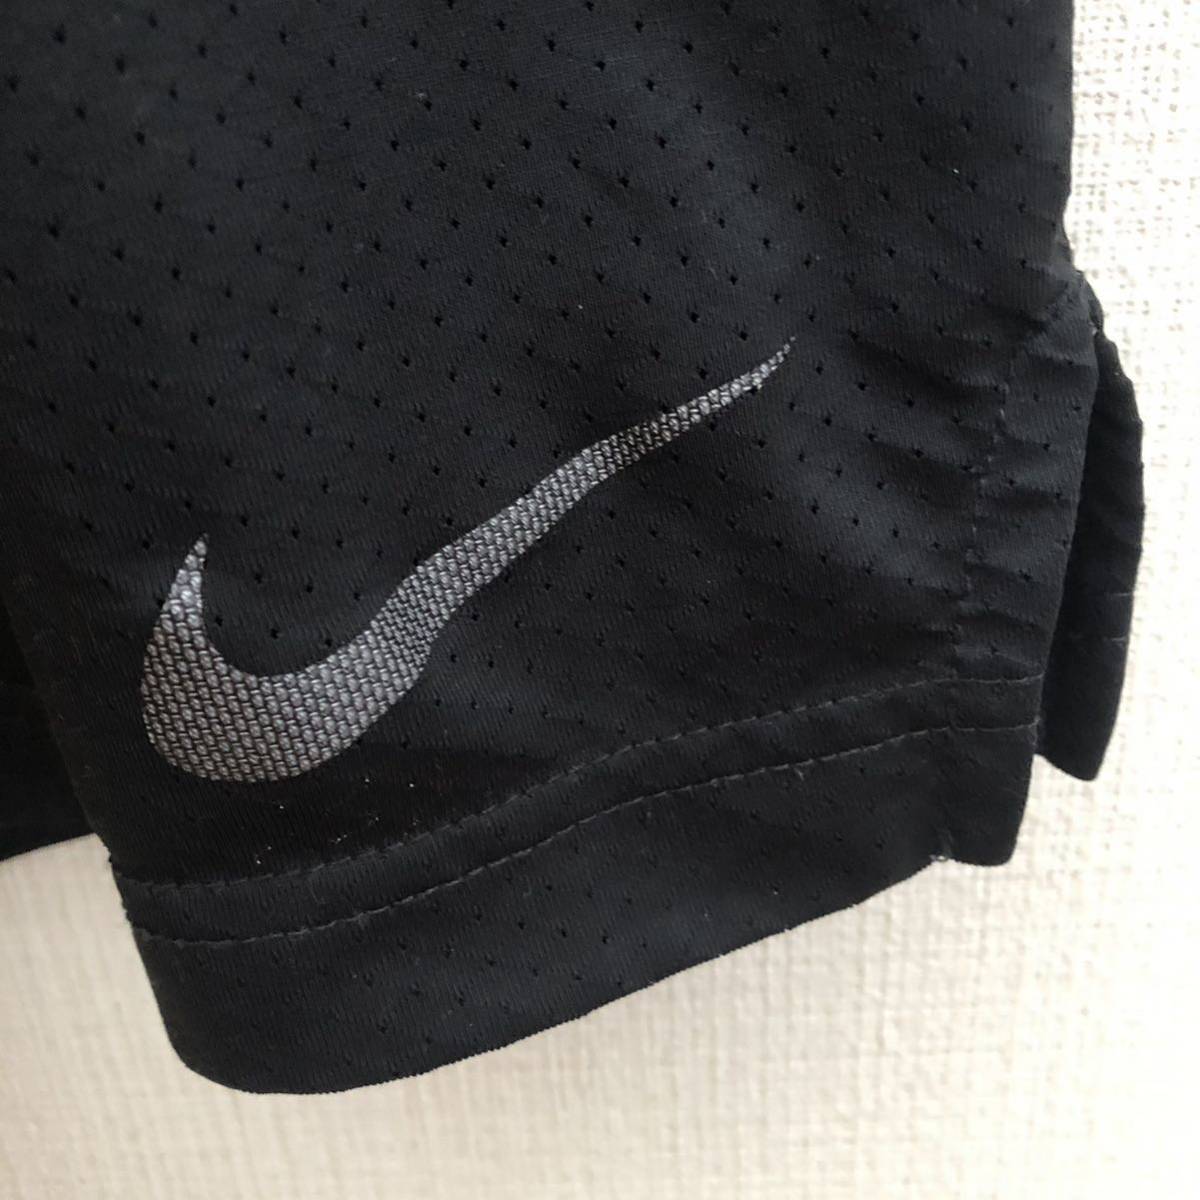 NIKE( Nike ) MNSTR сетка Short 4.0( черный ) * обе боковой карман * справочная цена :3.300 иен *927546-010*2XL размер (230419)